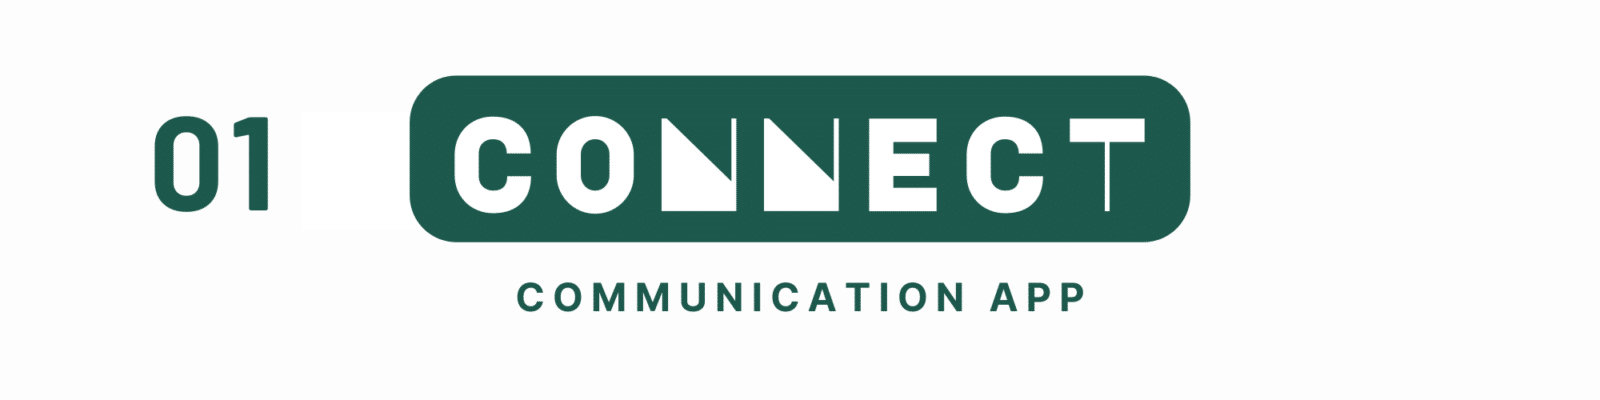 Connect: Communication App Header